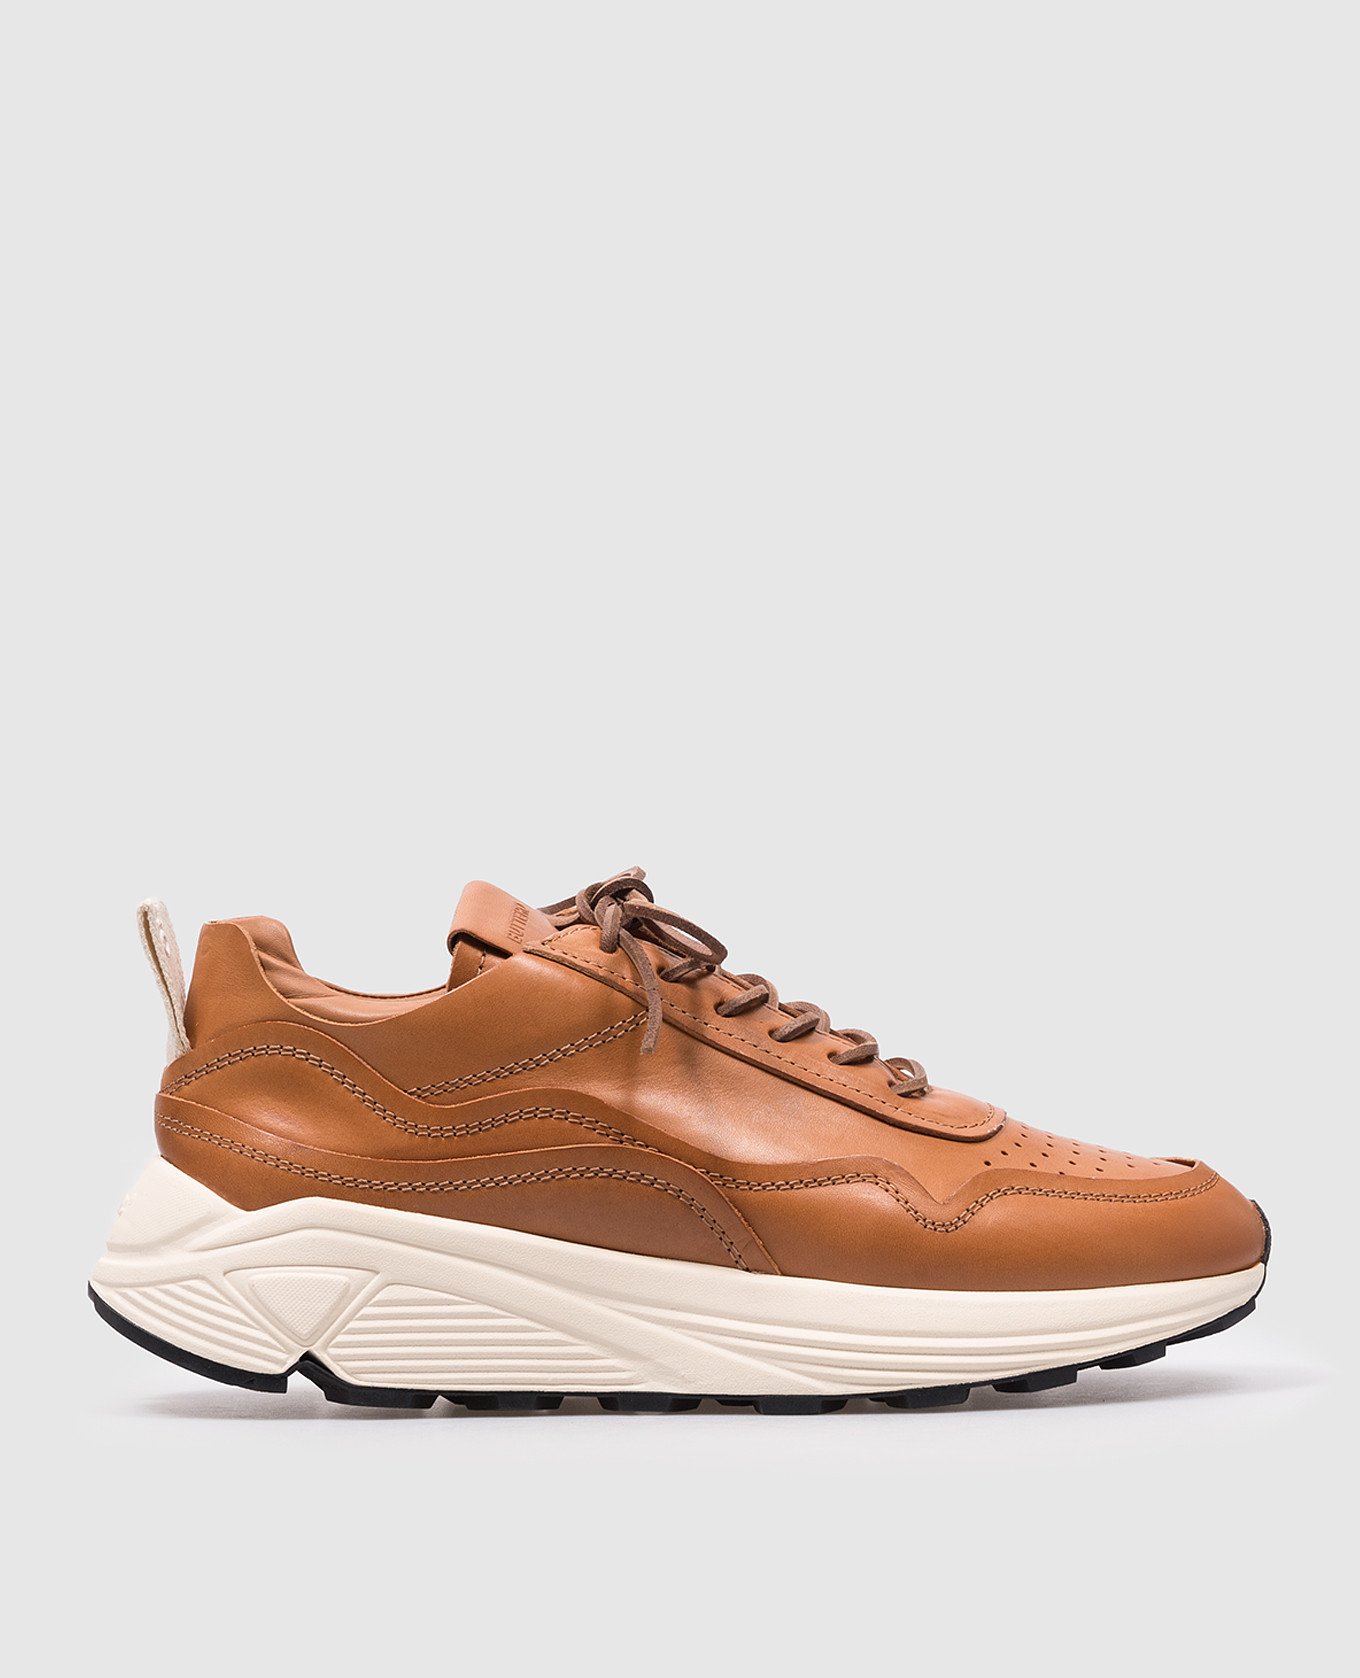 Vinci brown leather sneakers